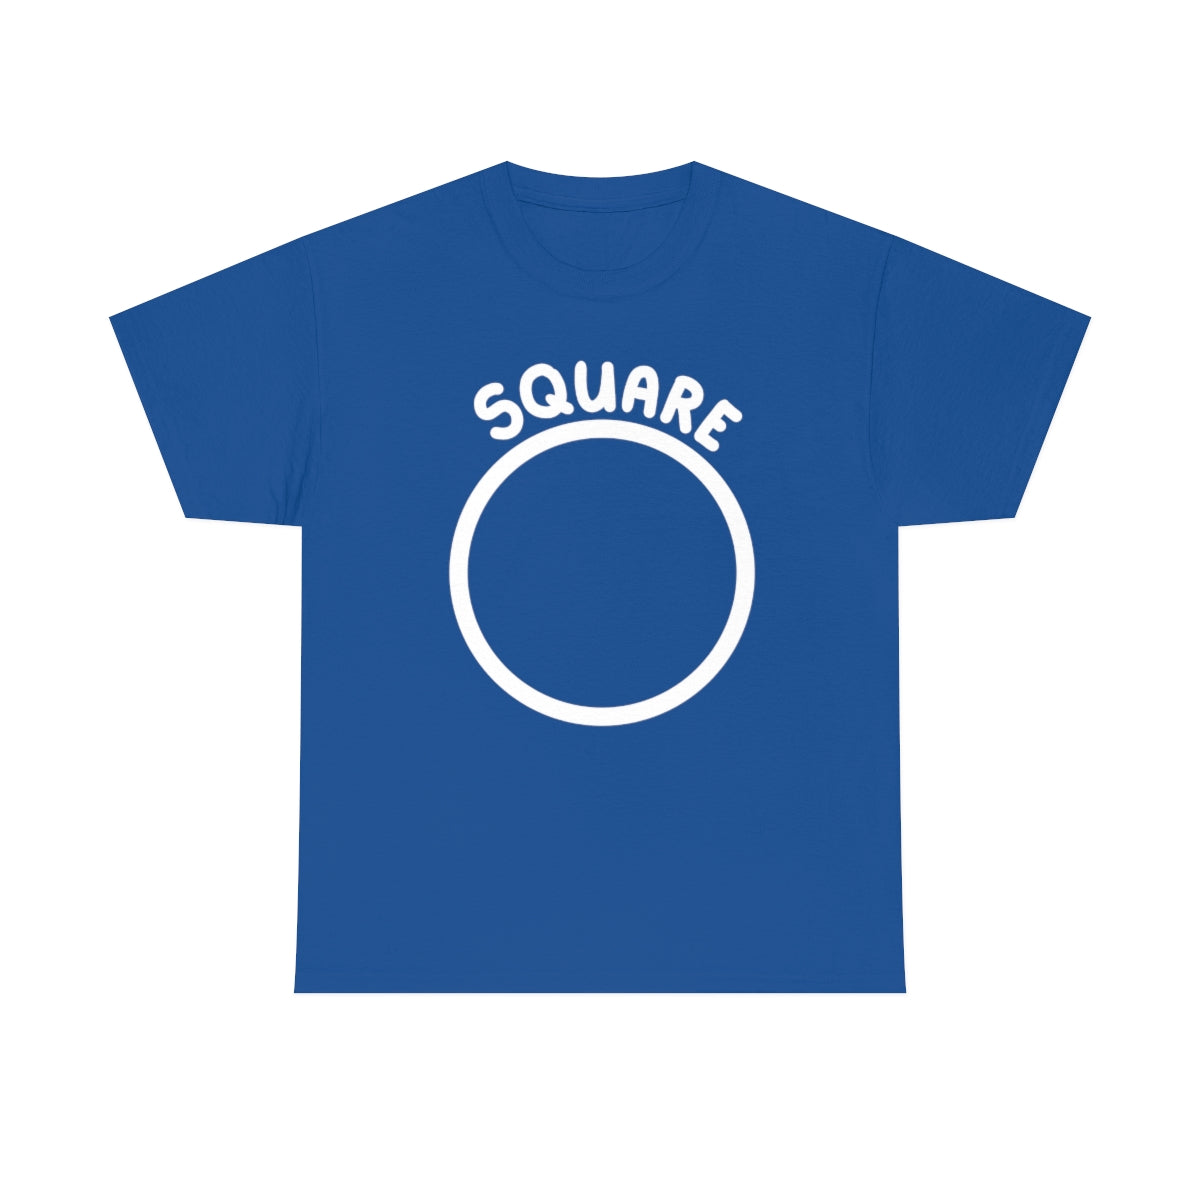 Square - T-Shirt T-Shirt Ooka Royal Blue S 